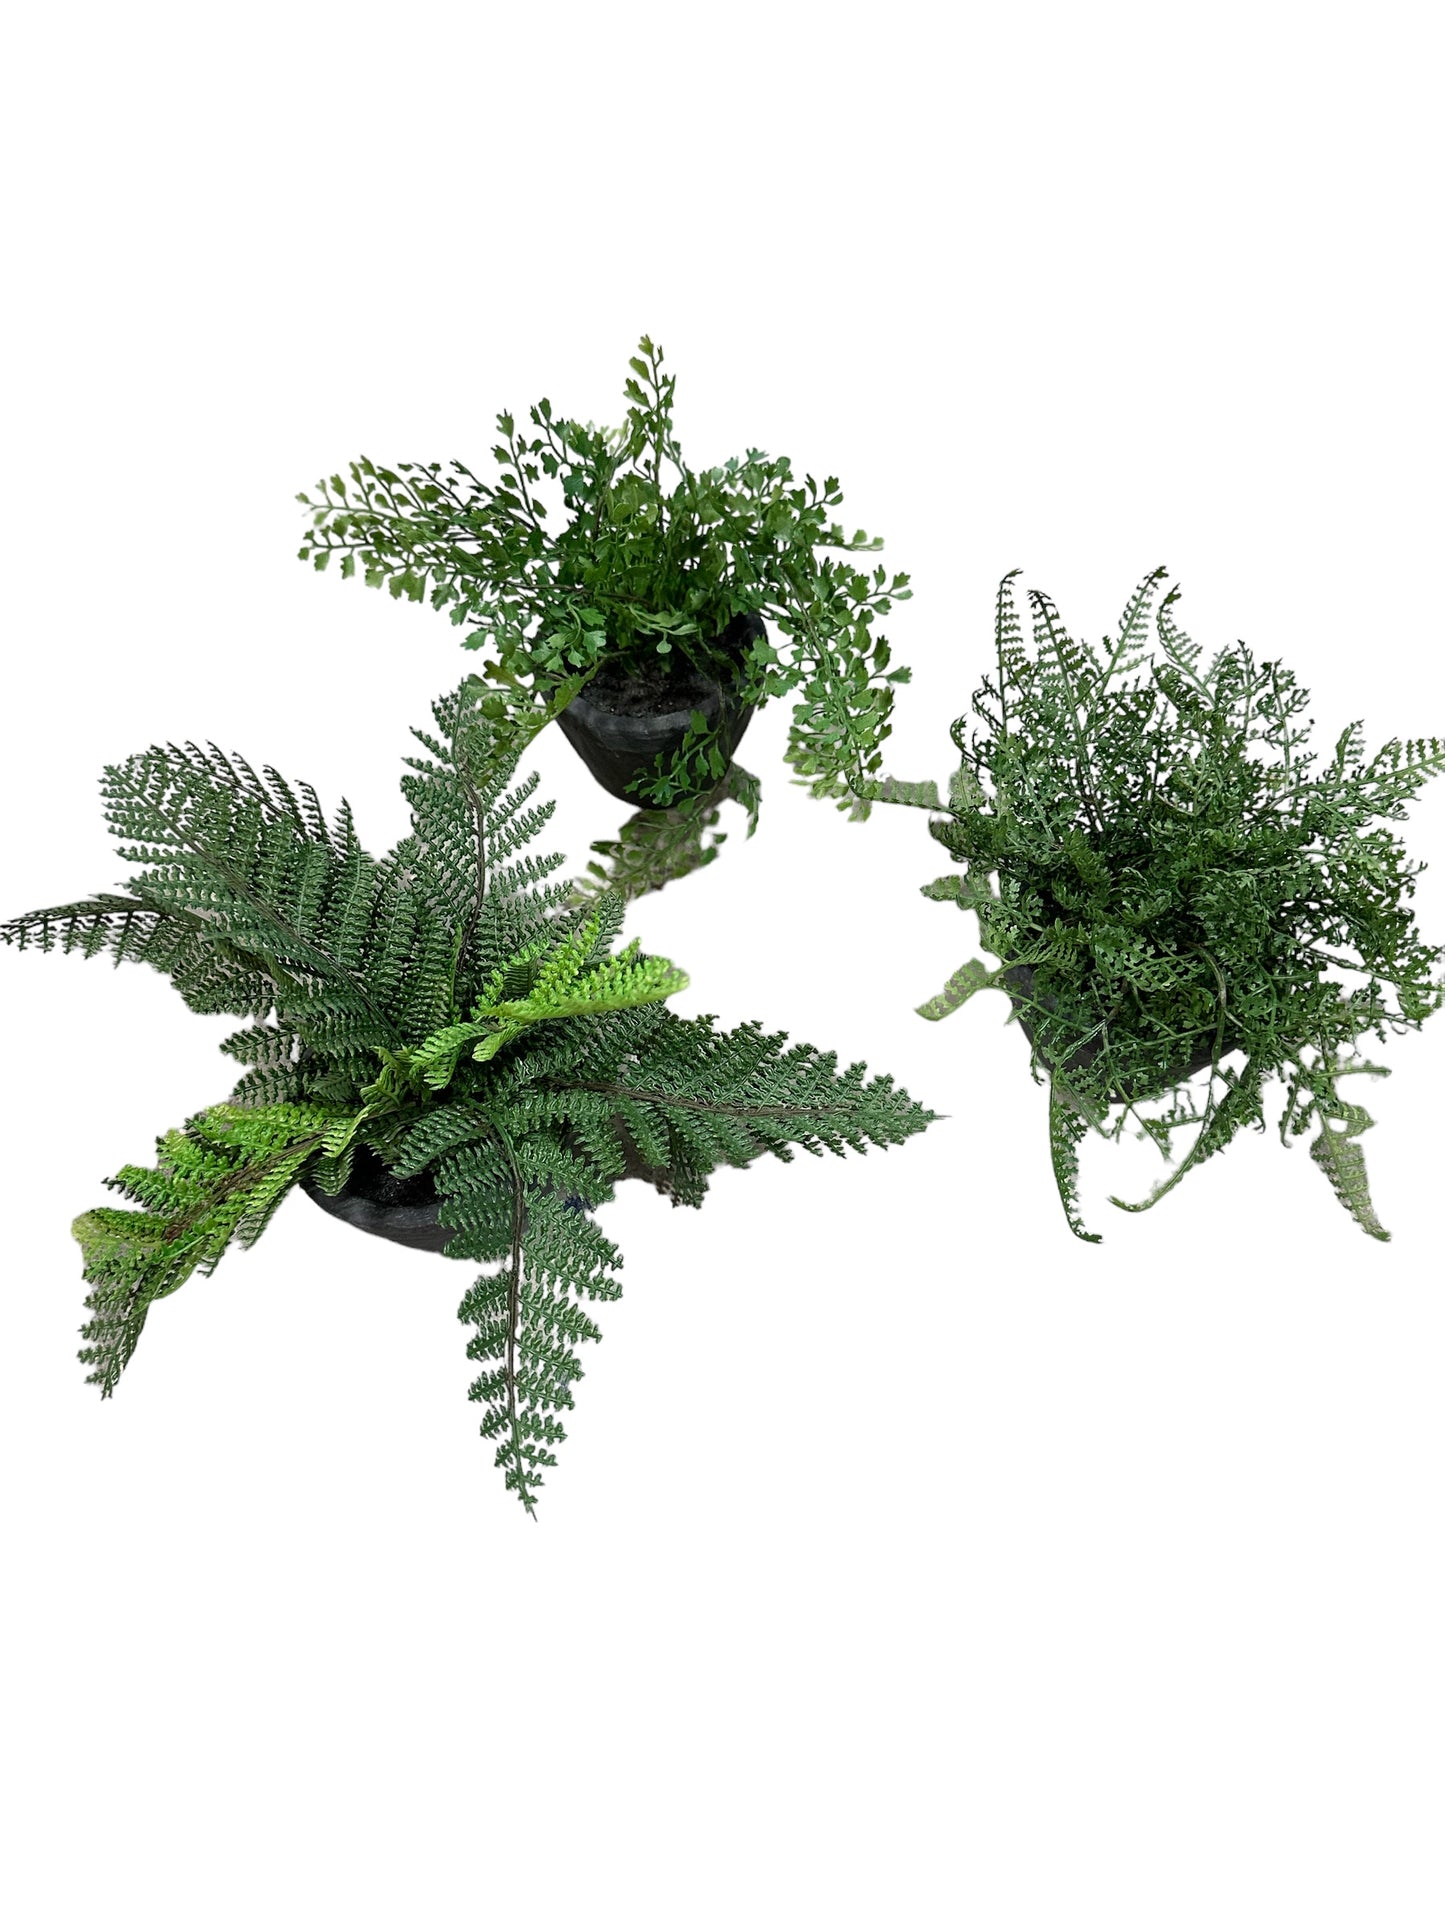 Greenery / Ferns